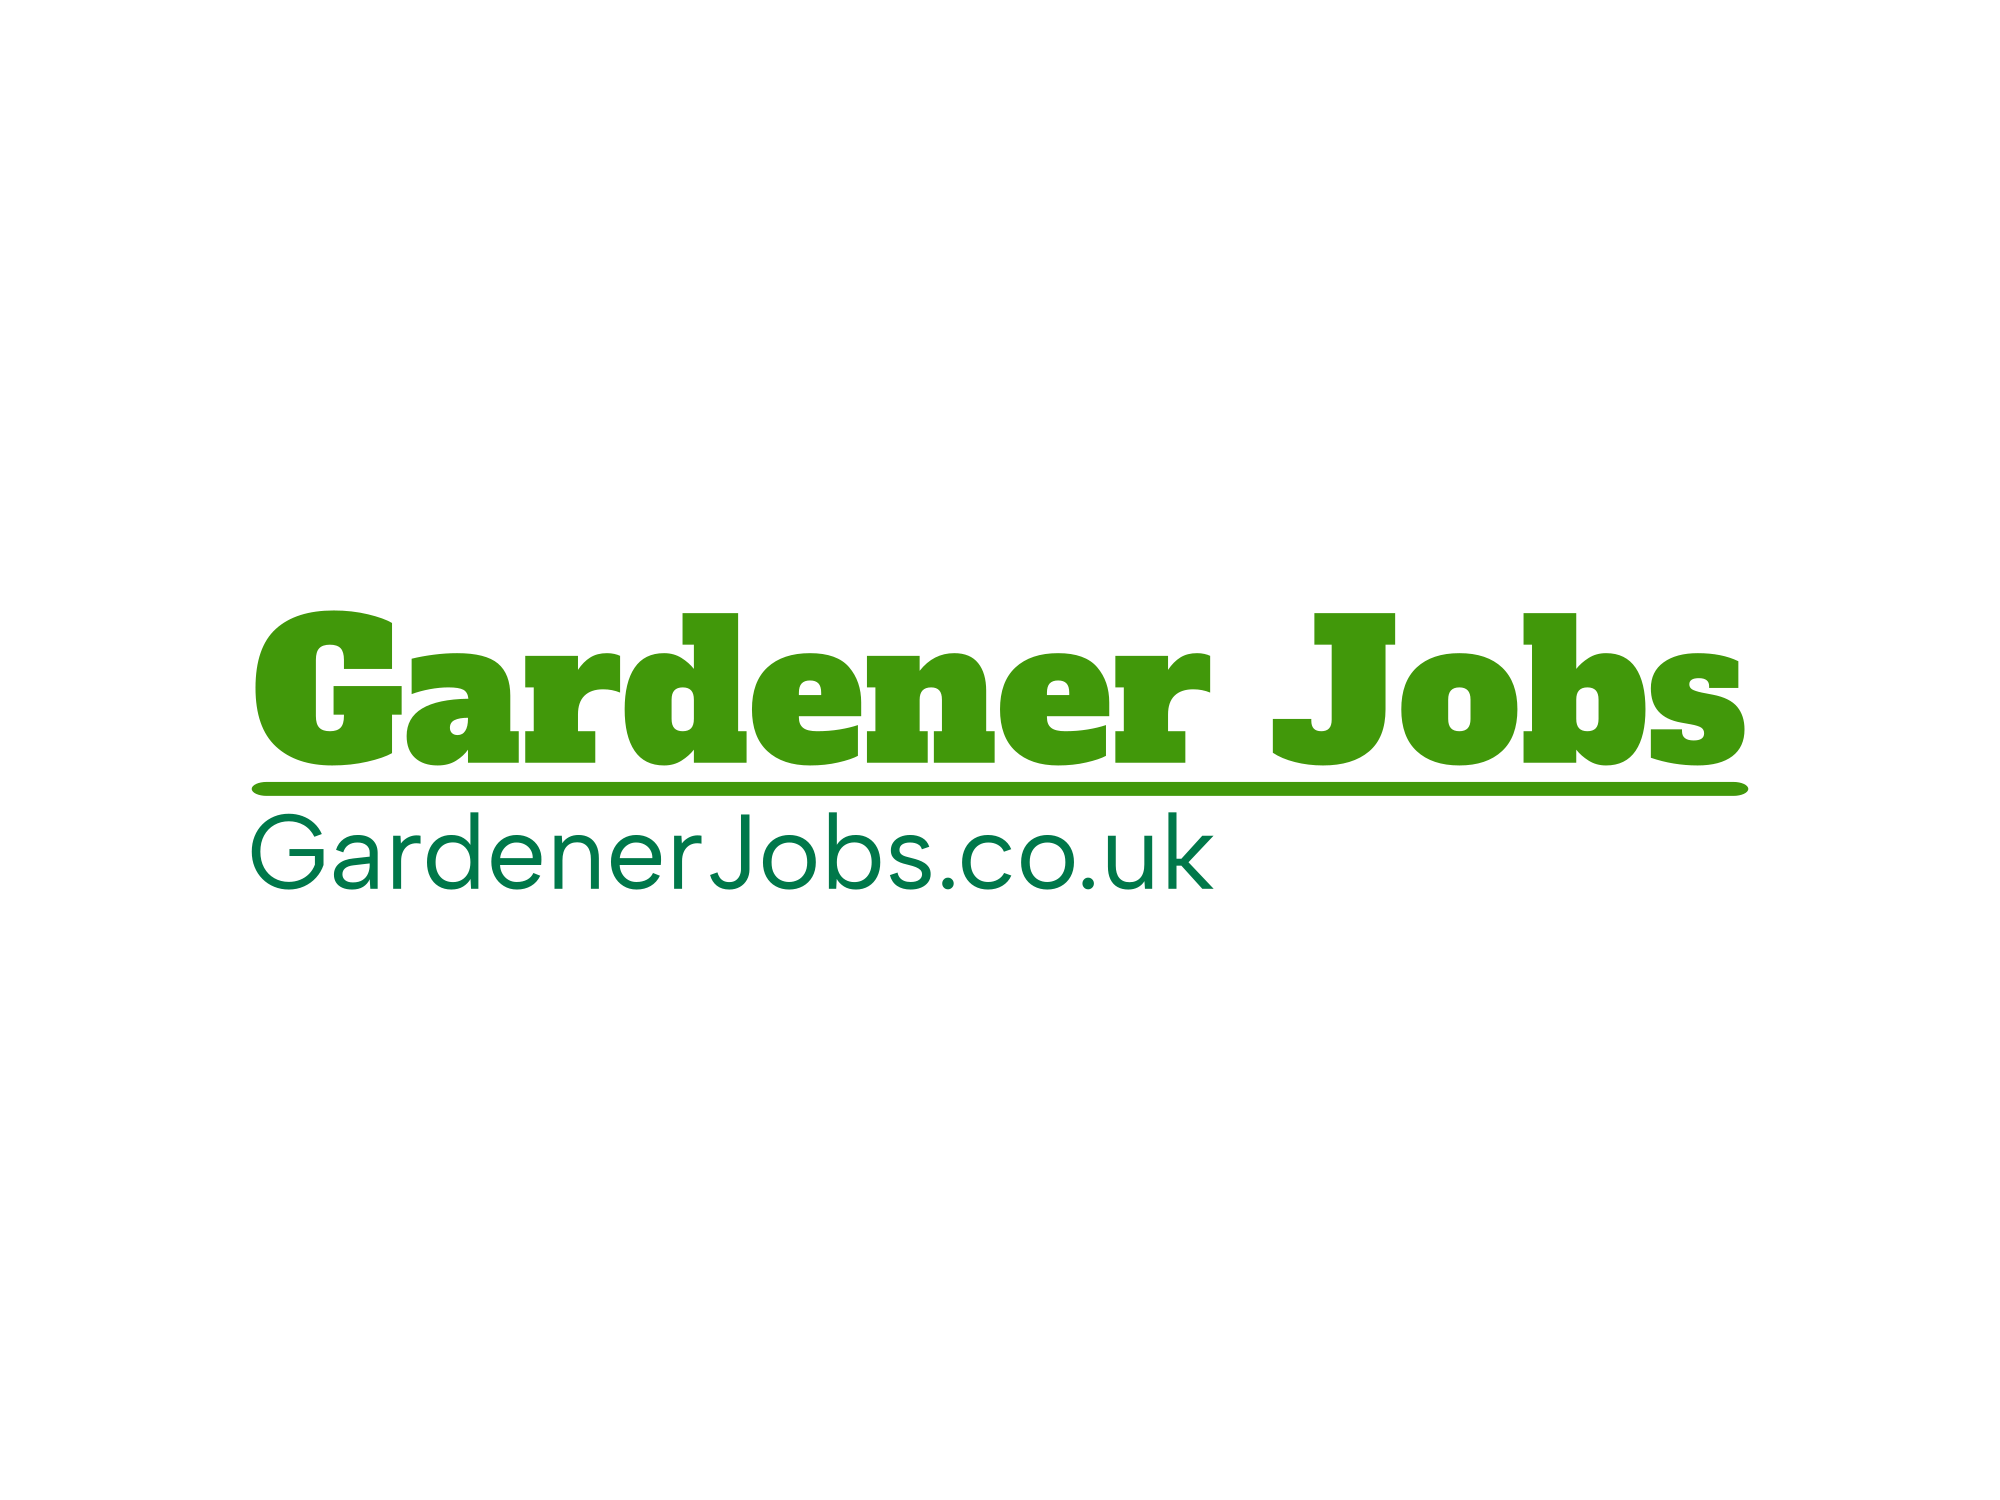 gardenerjobs.co.uk